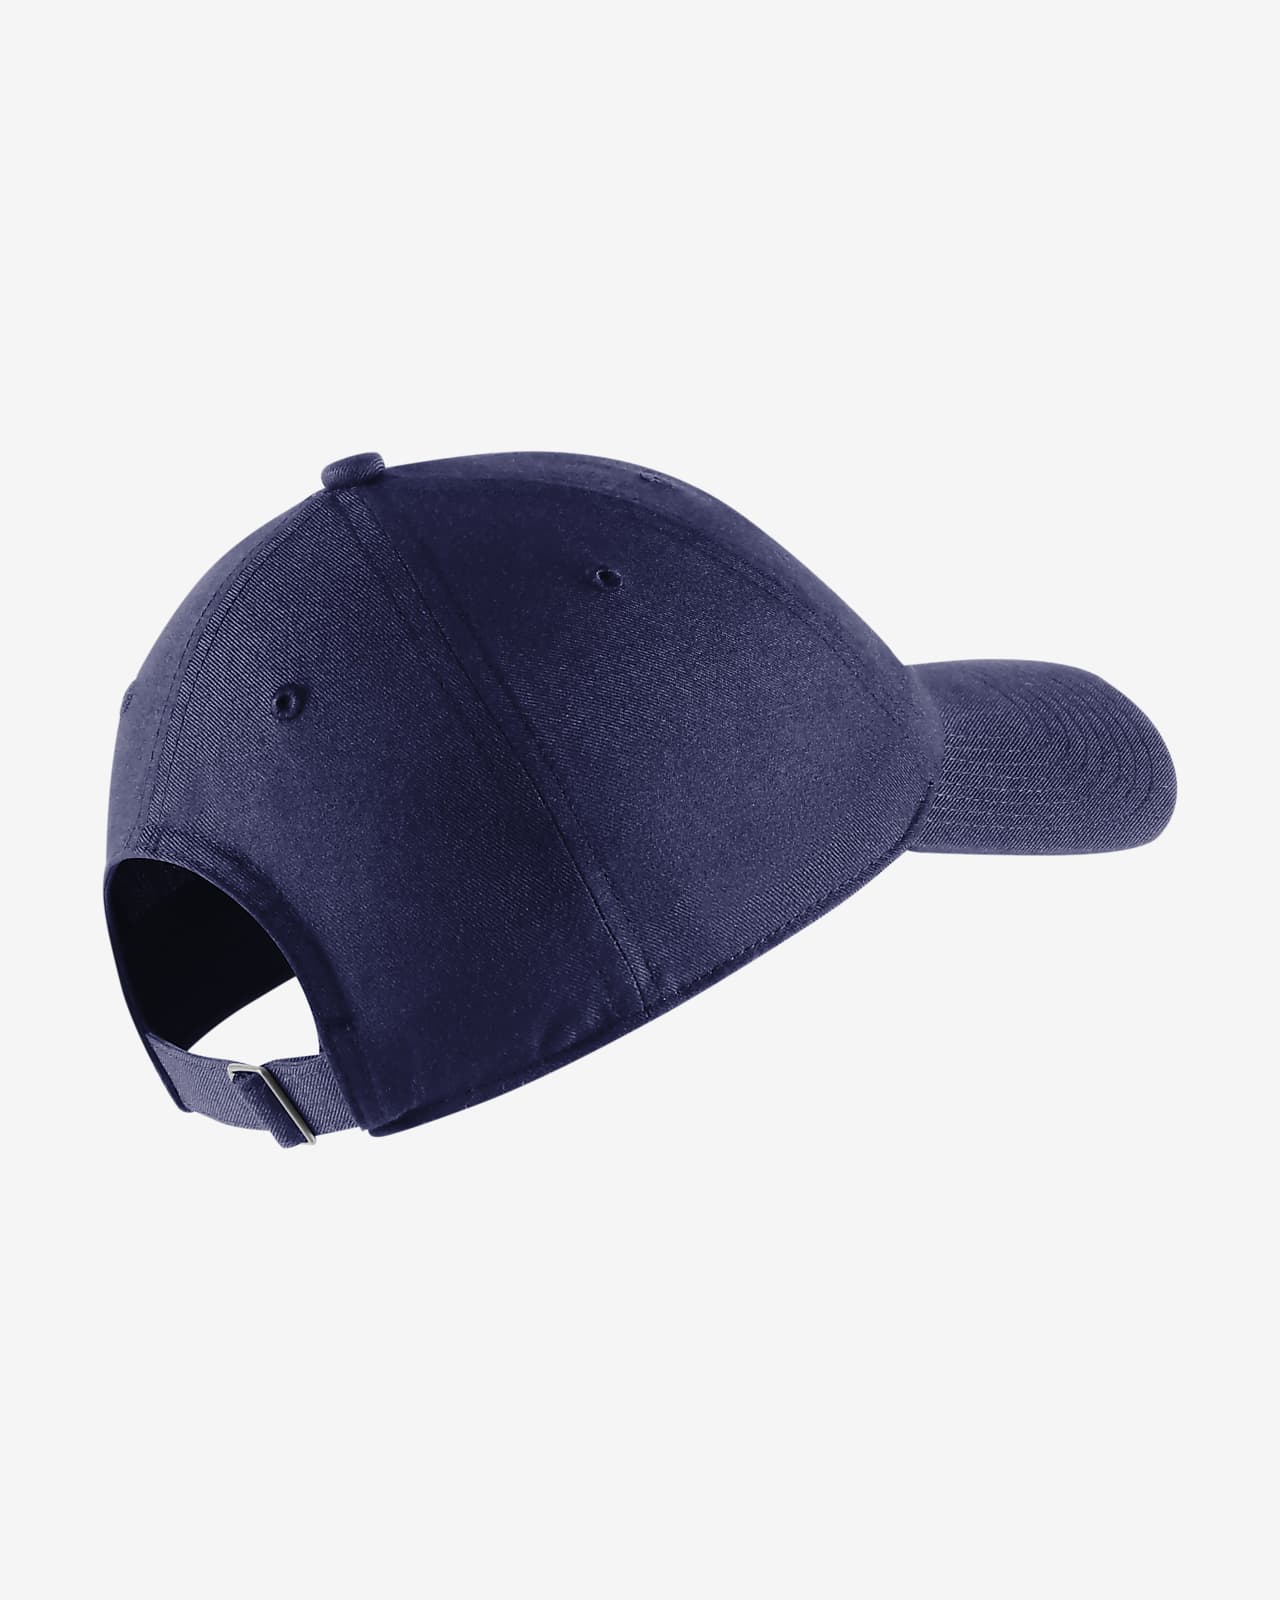 Nike Heritage86 (MLB Royals) Hat.